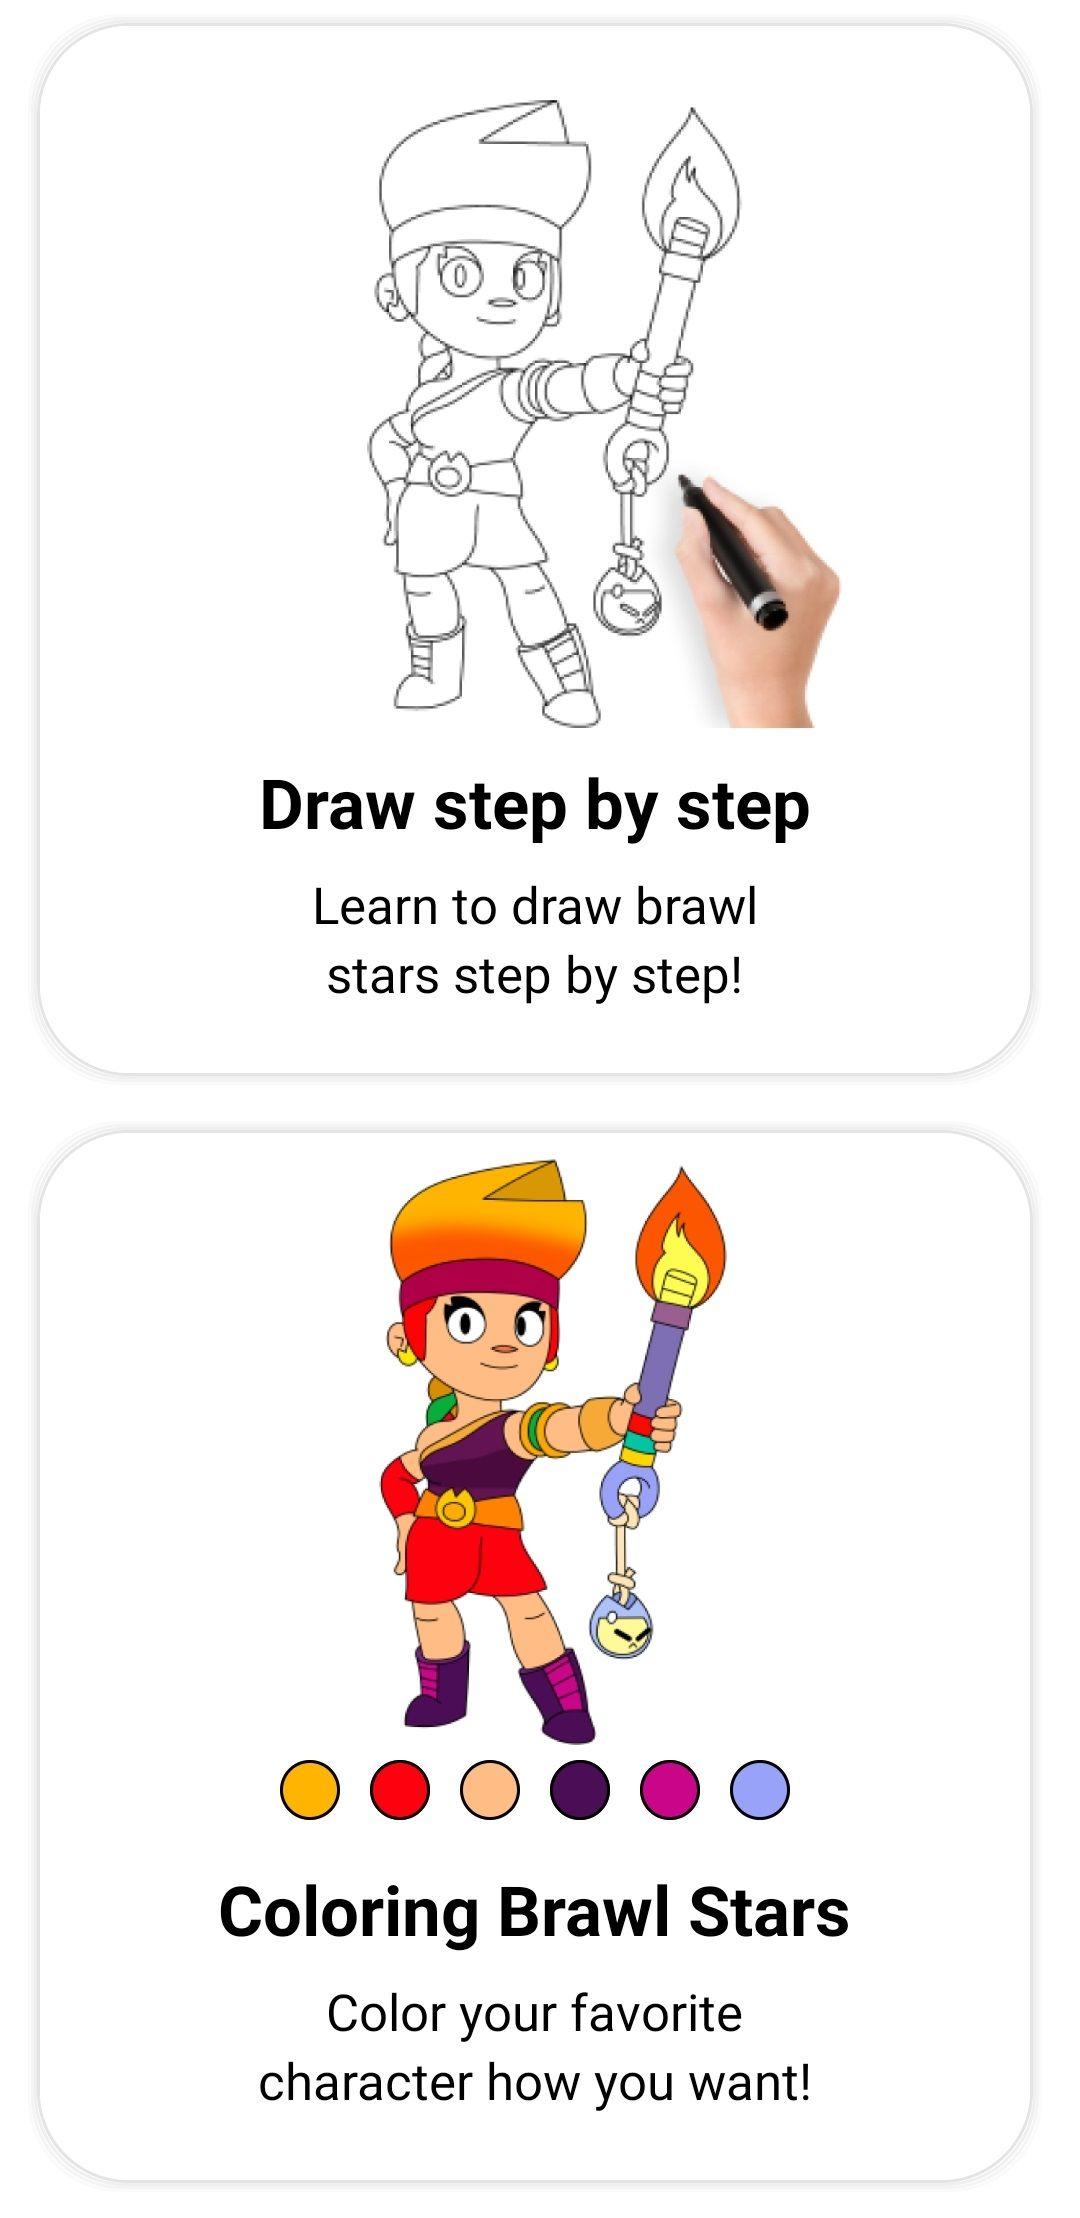 Coloring Brawl Stars How To Draw Brawl Stars For Android Apk Download - brawl stars data de lançamento do leon